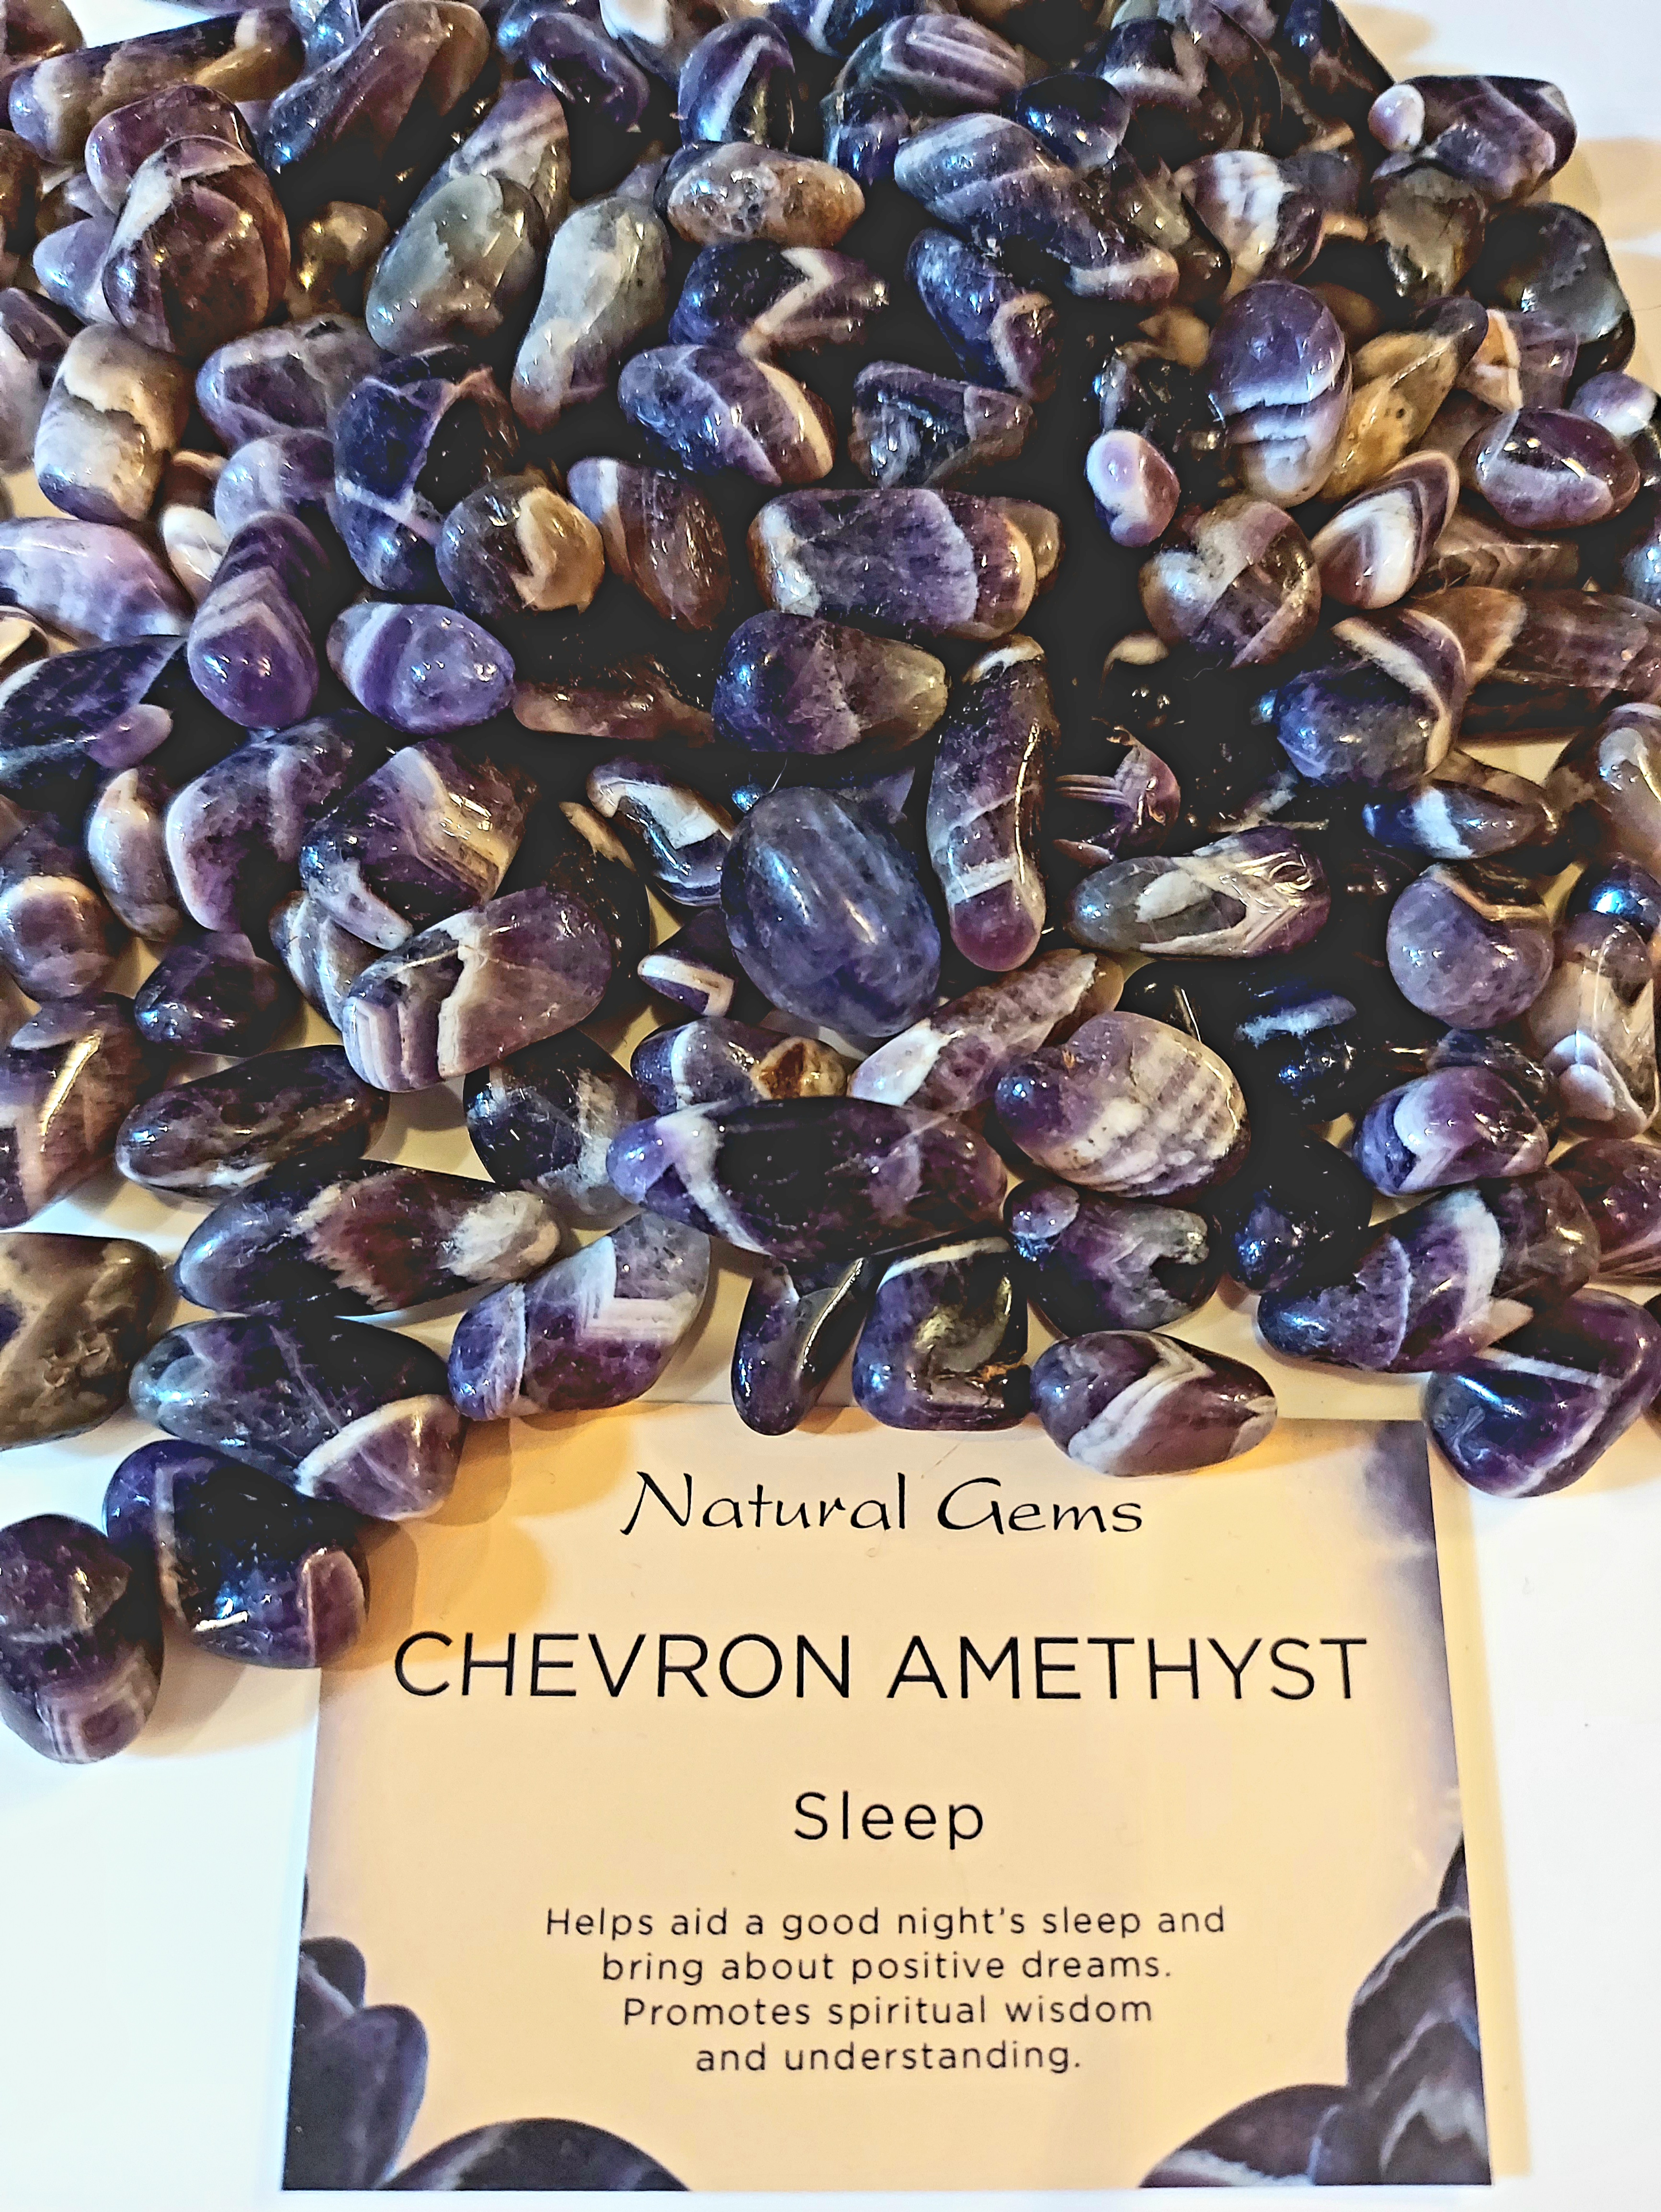 Chevron Amethyst healing crystal tumblestone x 1 piece.